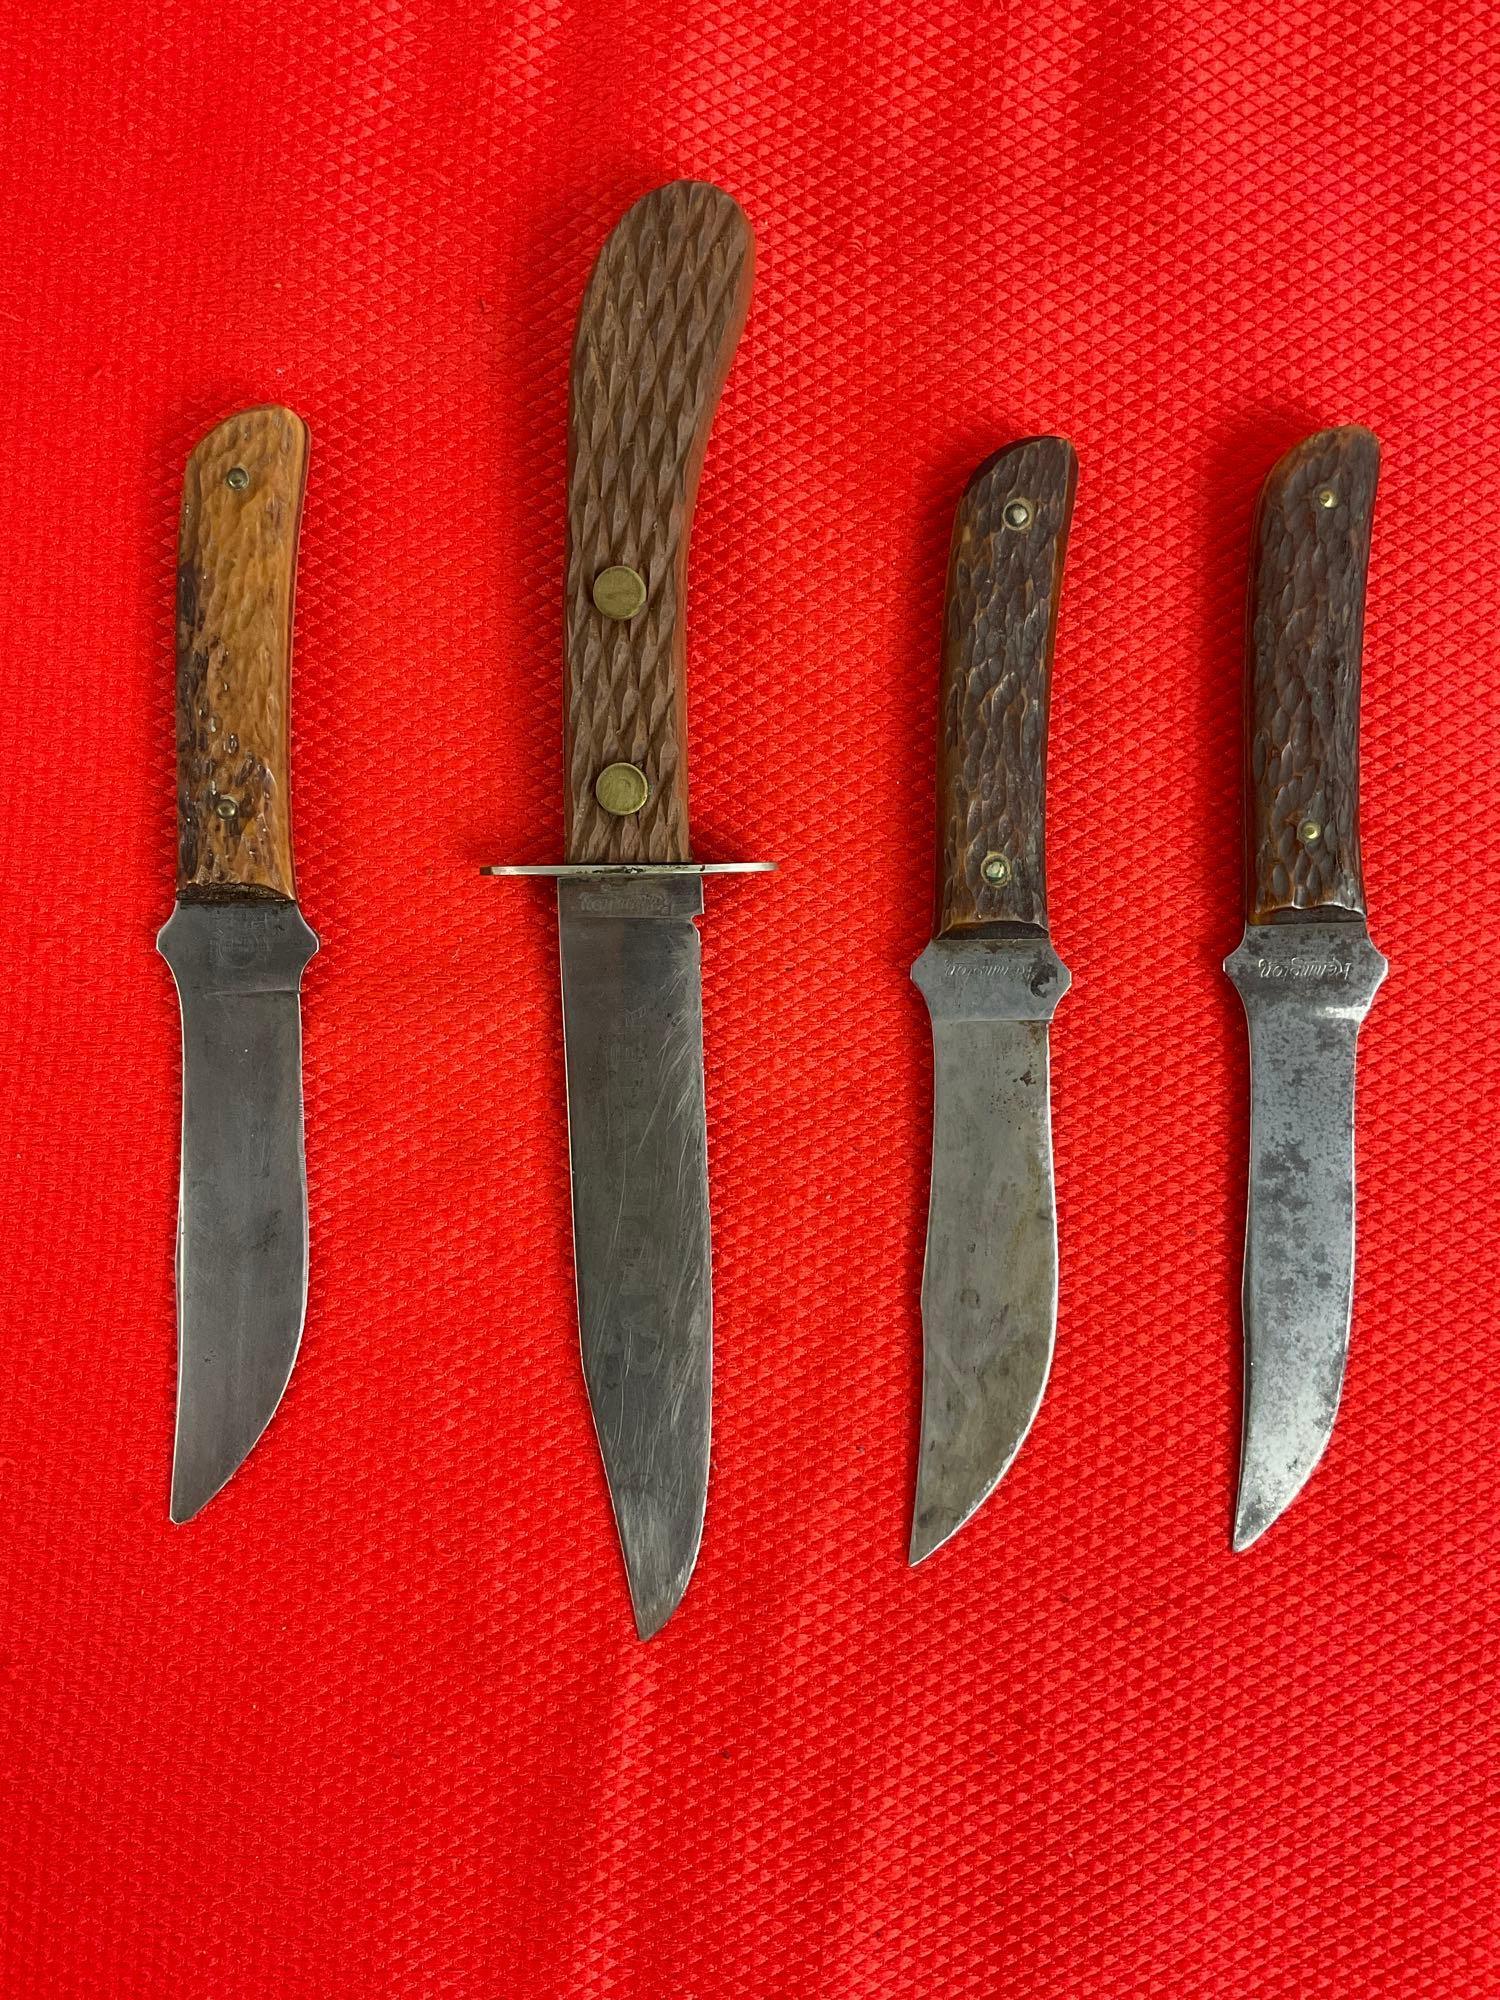 4 pcs Vintage Remington Steel Fixed Blade Hunting Knives. 3x Models RH-4 & 1 RH-6. 3 Sheathes. See